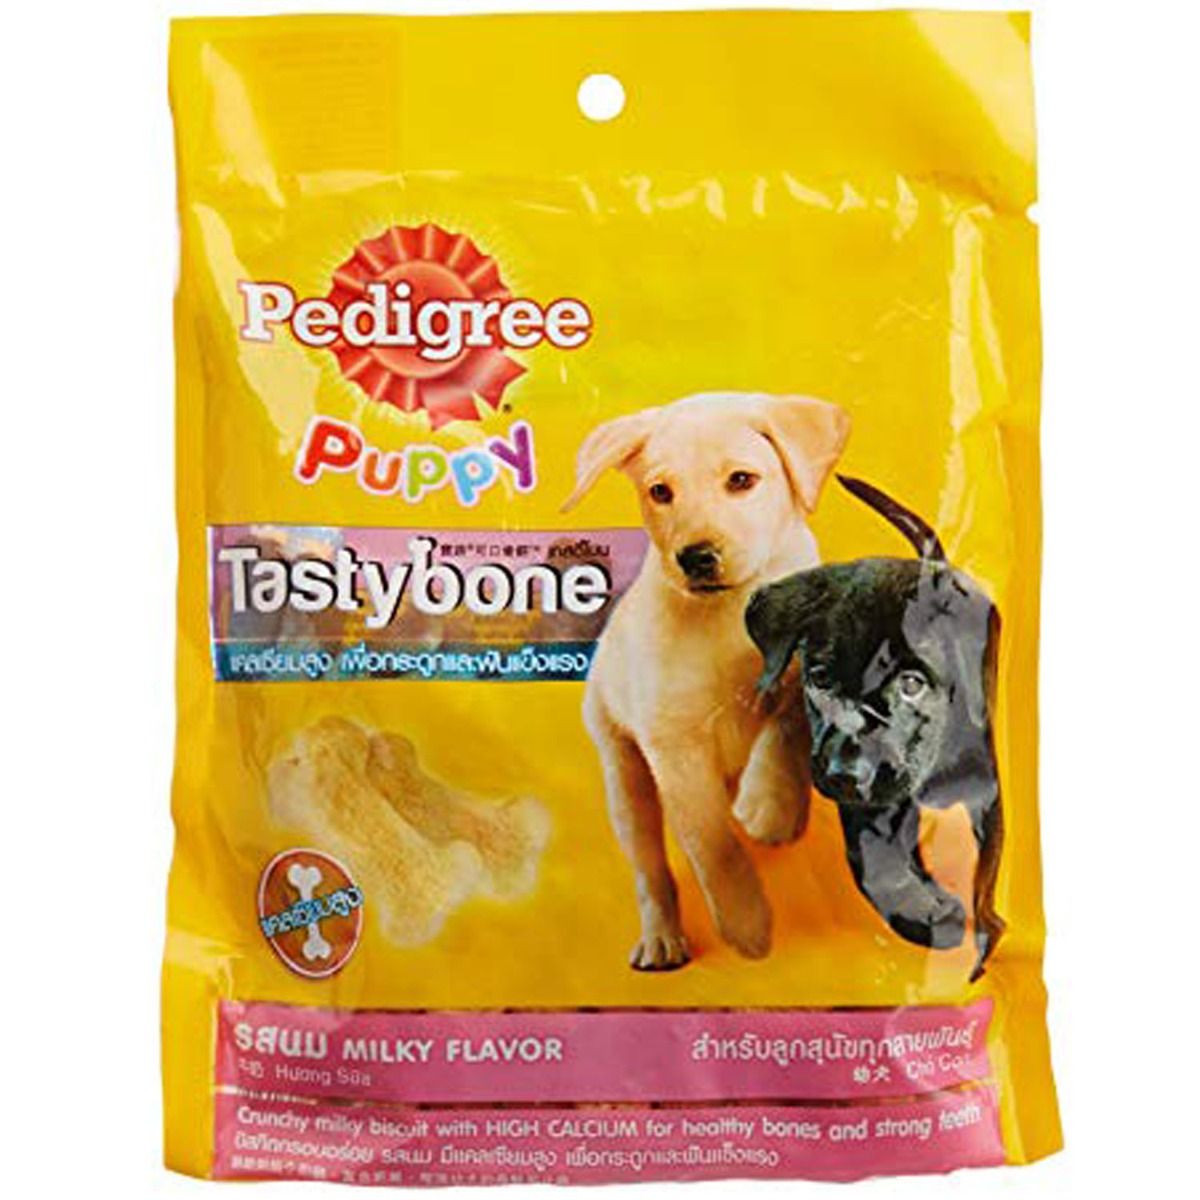 Buy Pedigree Puppy Tastybone, 200 gm Online